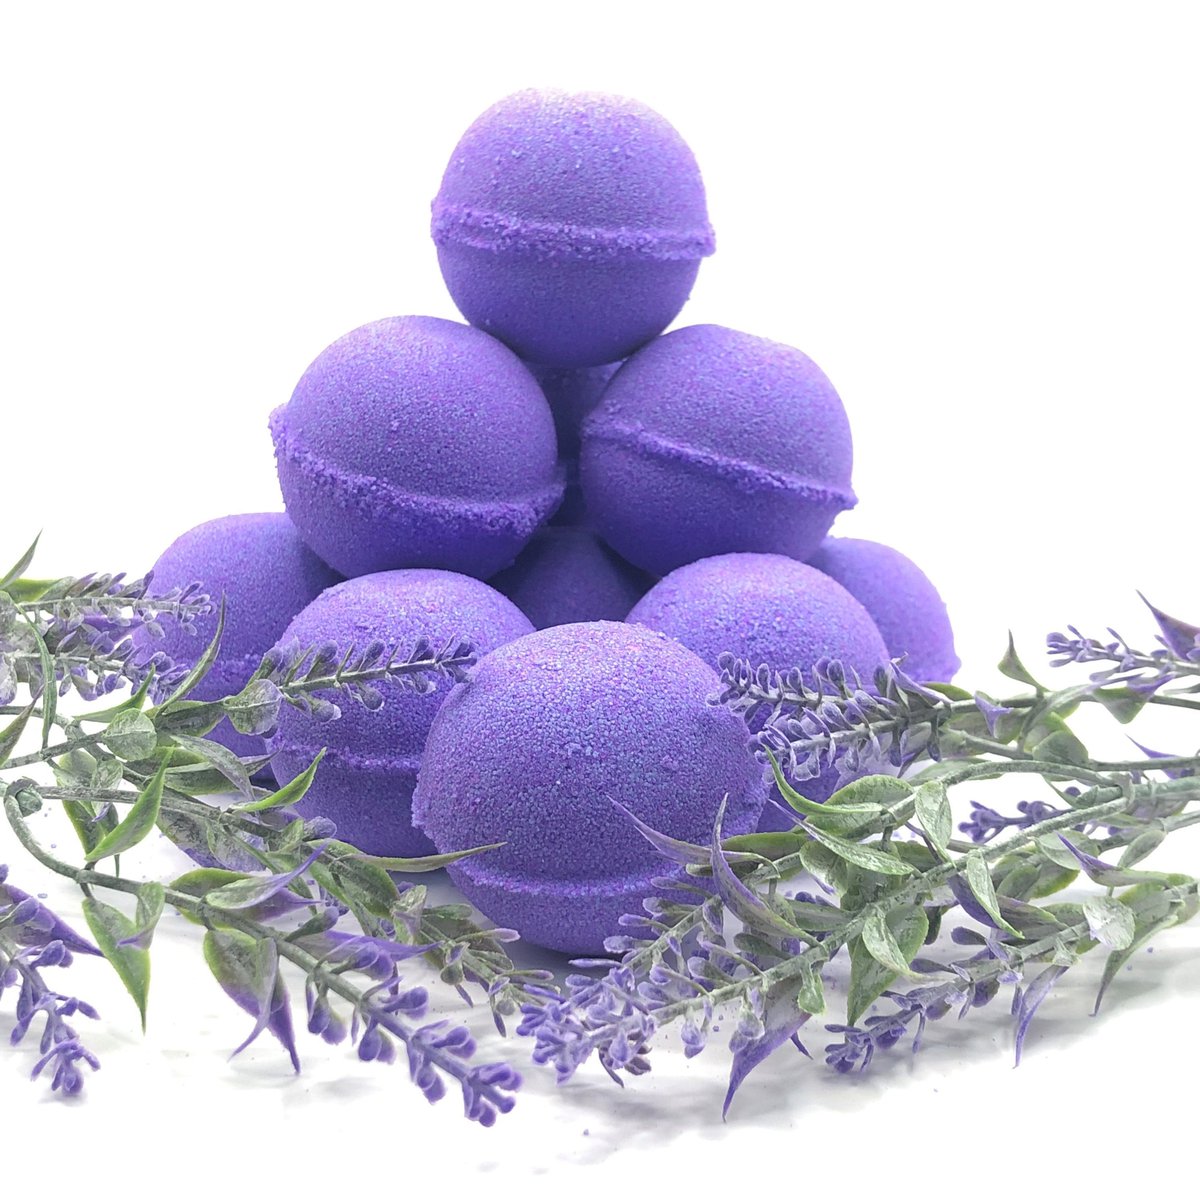 Thanks for the great review Linda H. ★★★★★! etsy.me/3OMkAkO #etsy #purple #bridalshower #minibathbombs #bathbombsforgirls #samplefizzybombs #lavenderbathbombs #organic #natural #soothing